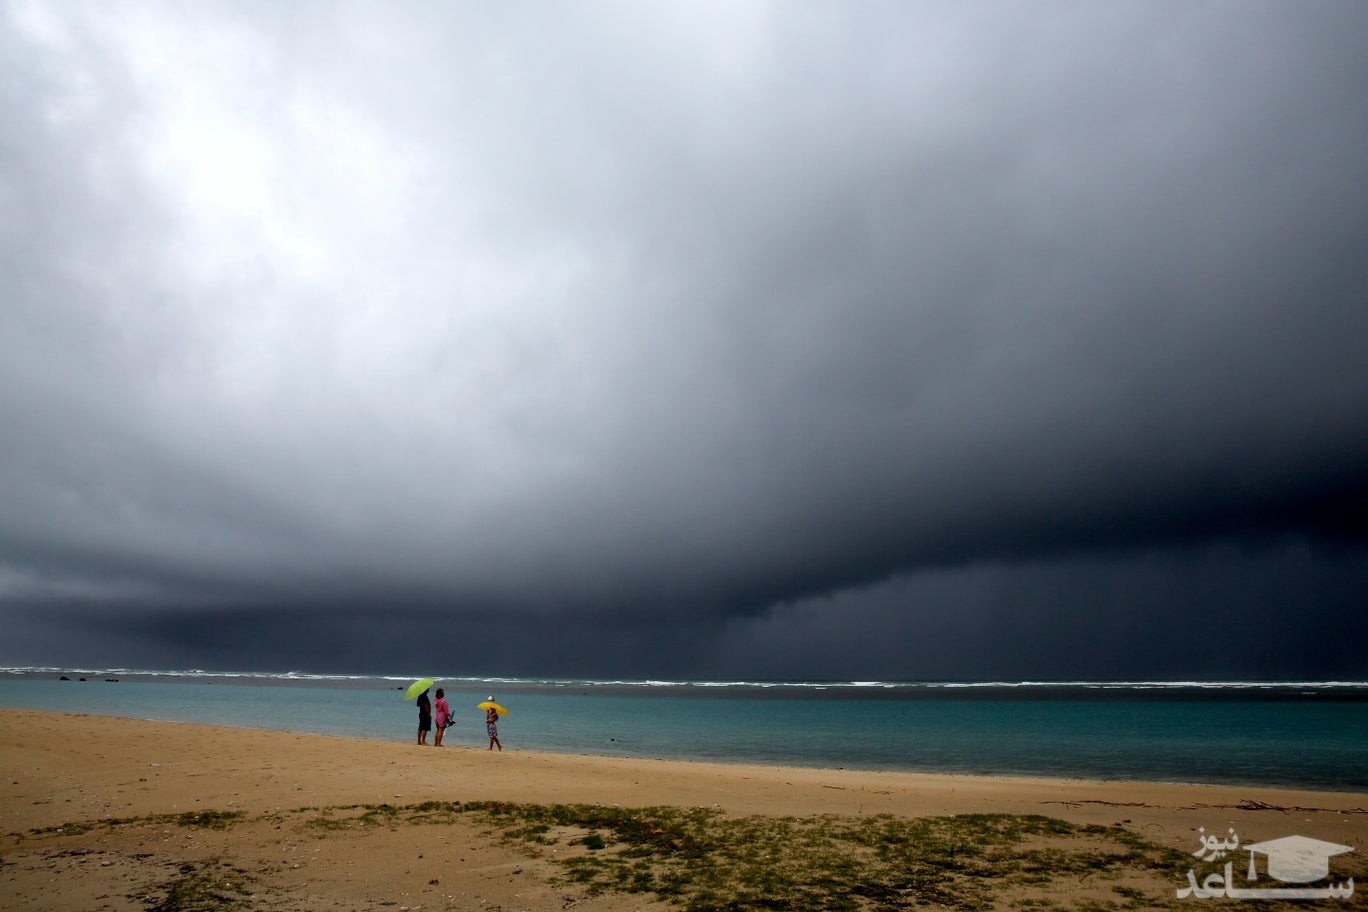 بارش باران در ساحل" هونولولو" هاوایی آمریکا/ آسوشیتدپرس